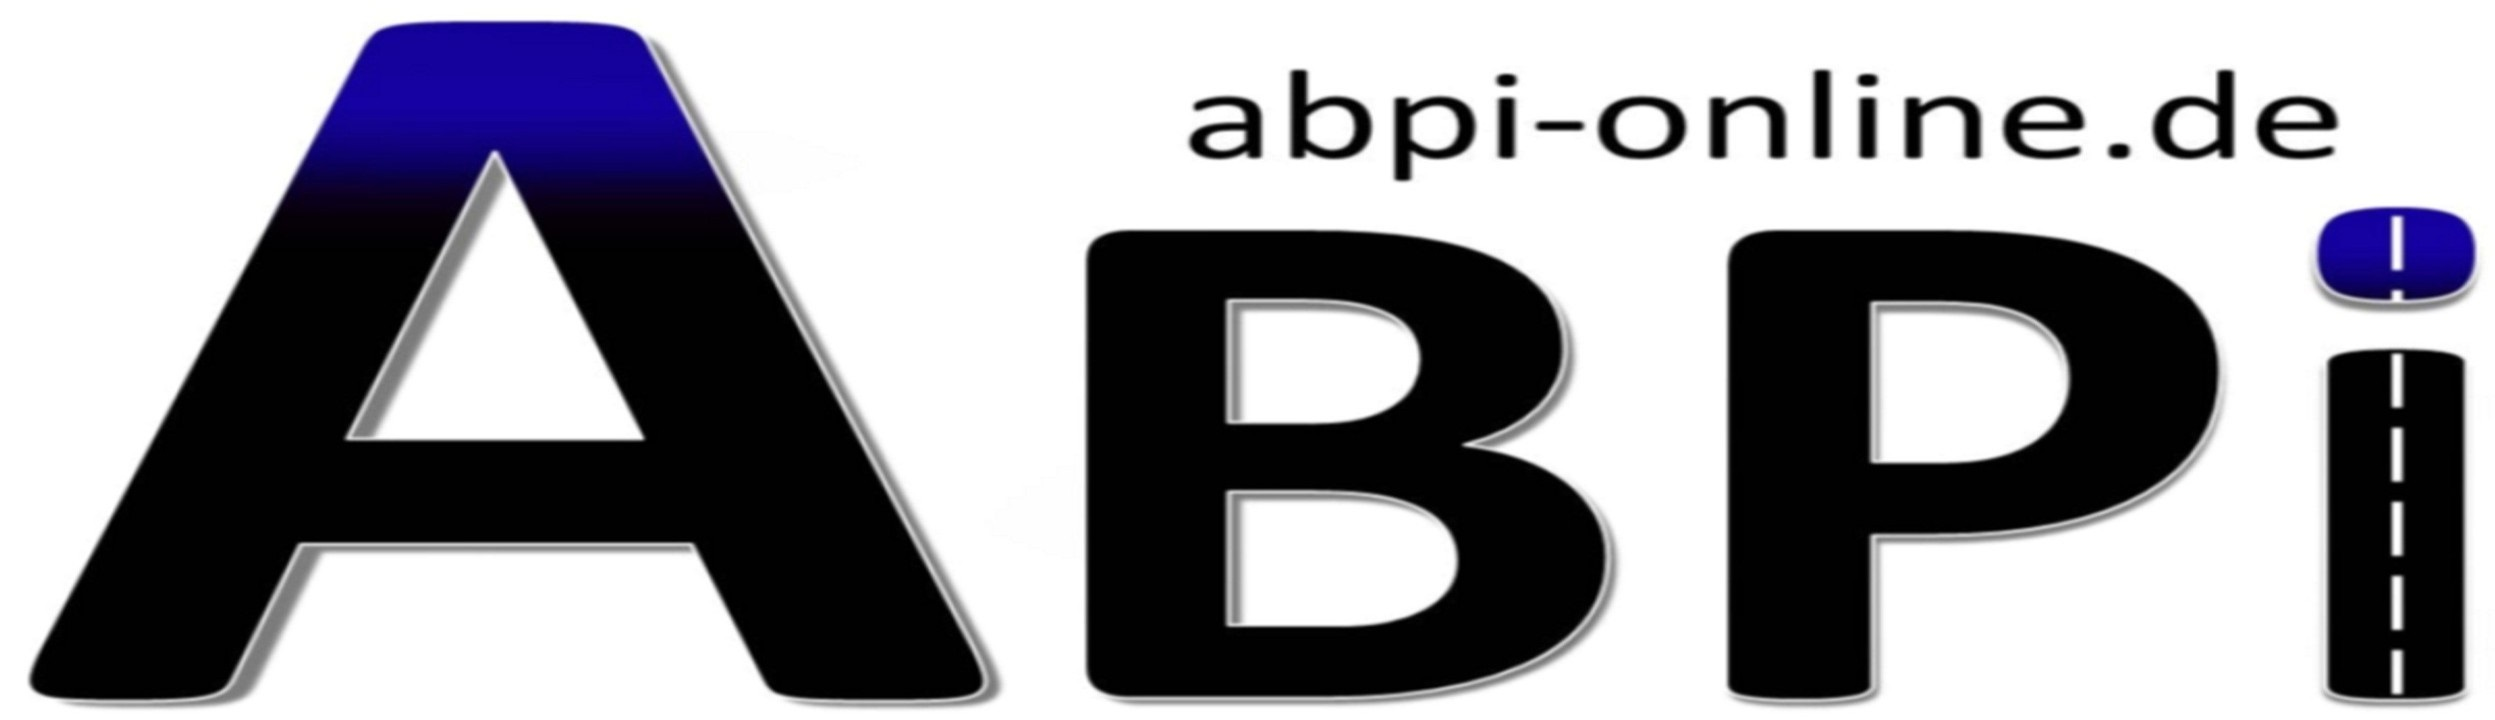 ABP1